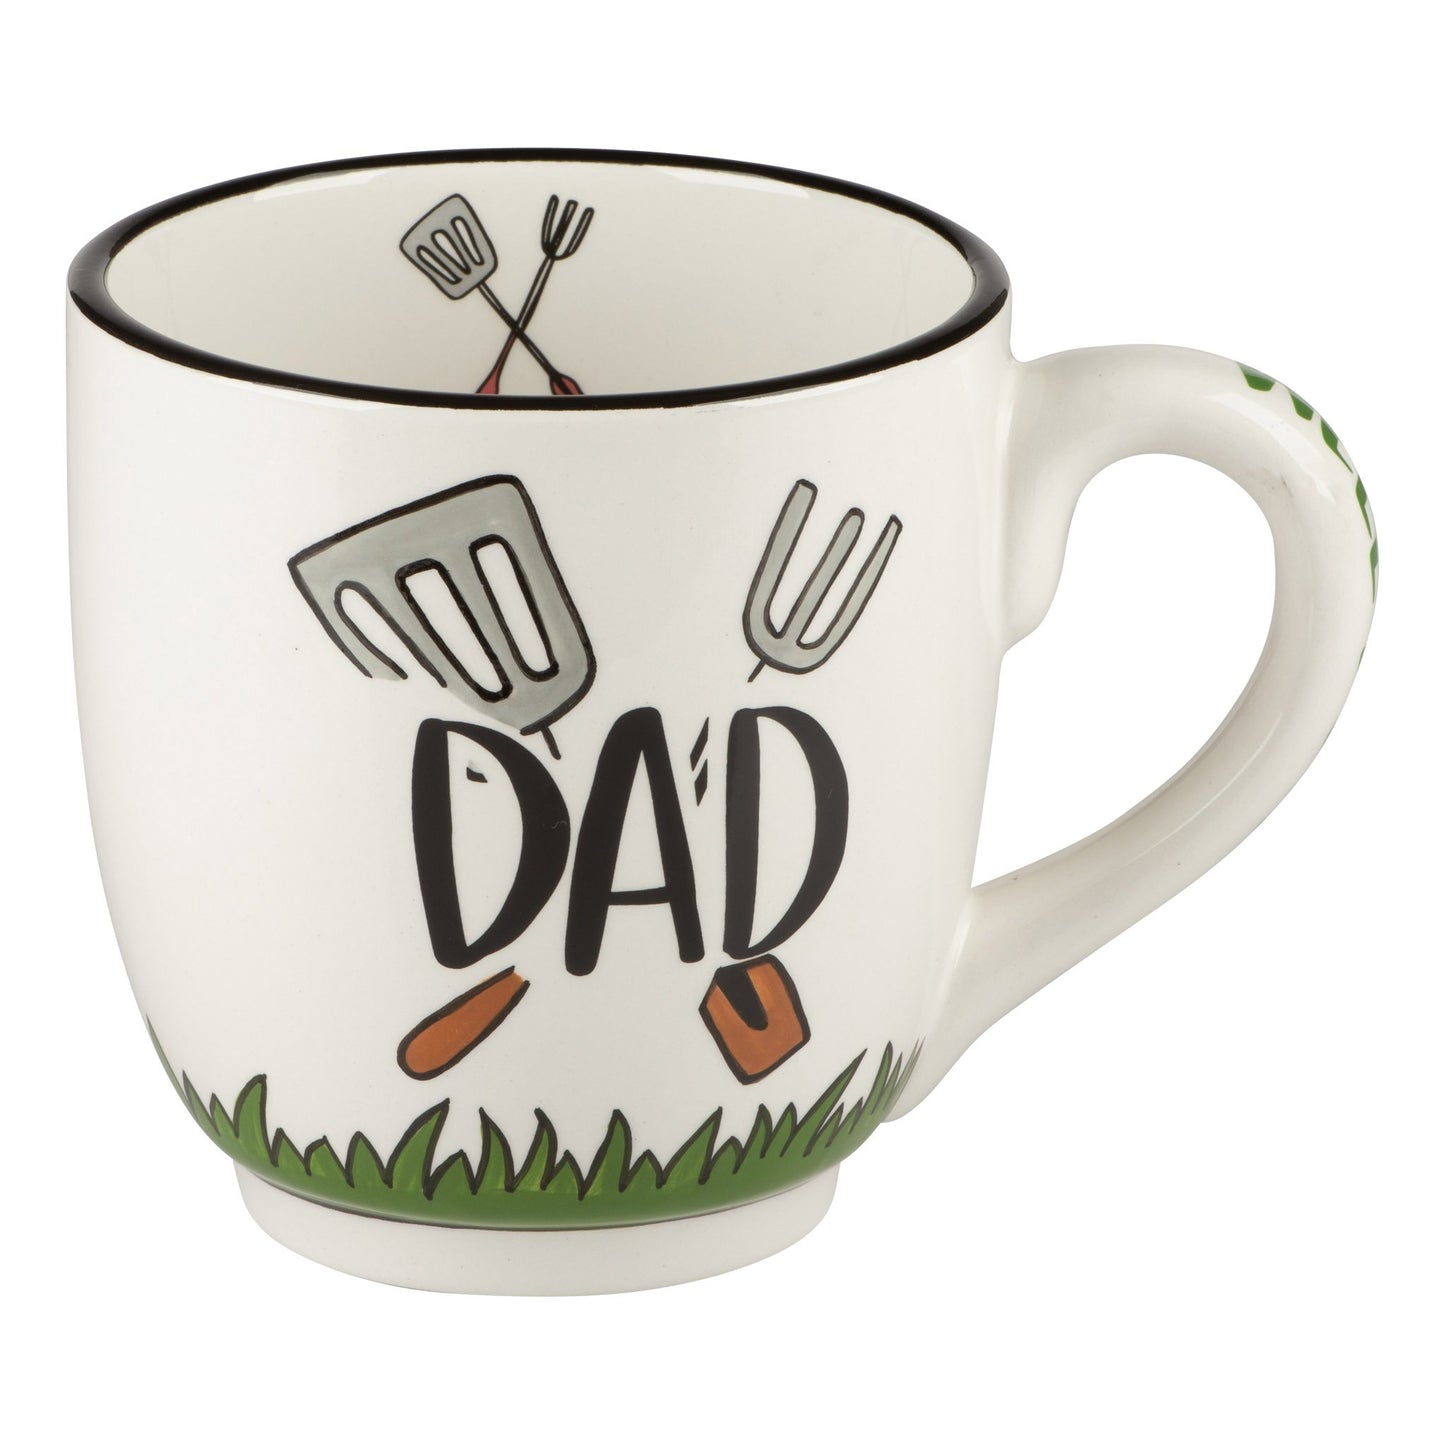 * Dad Grilling Mug